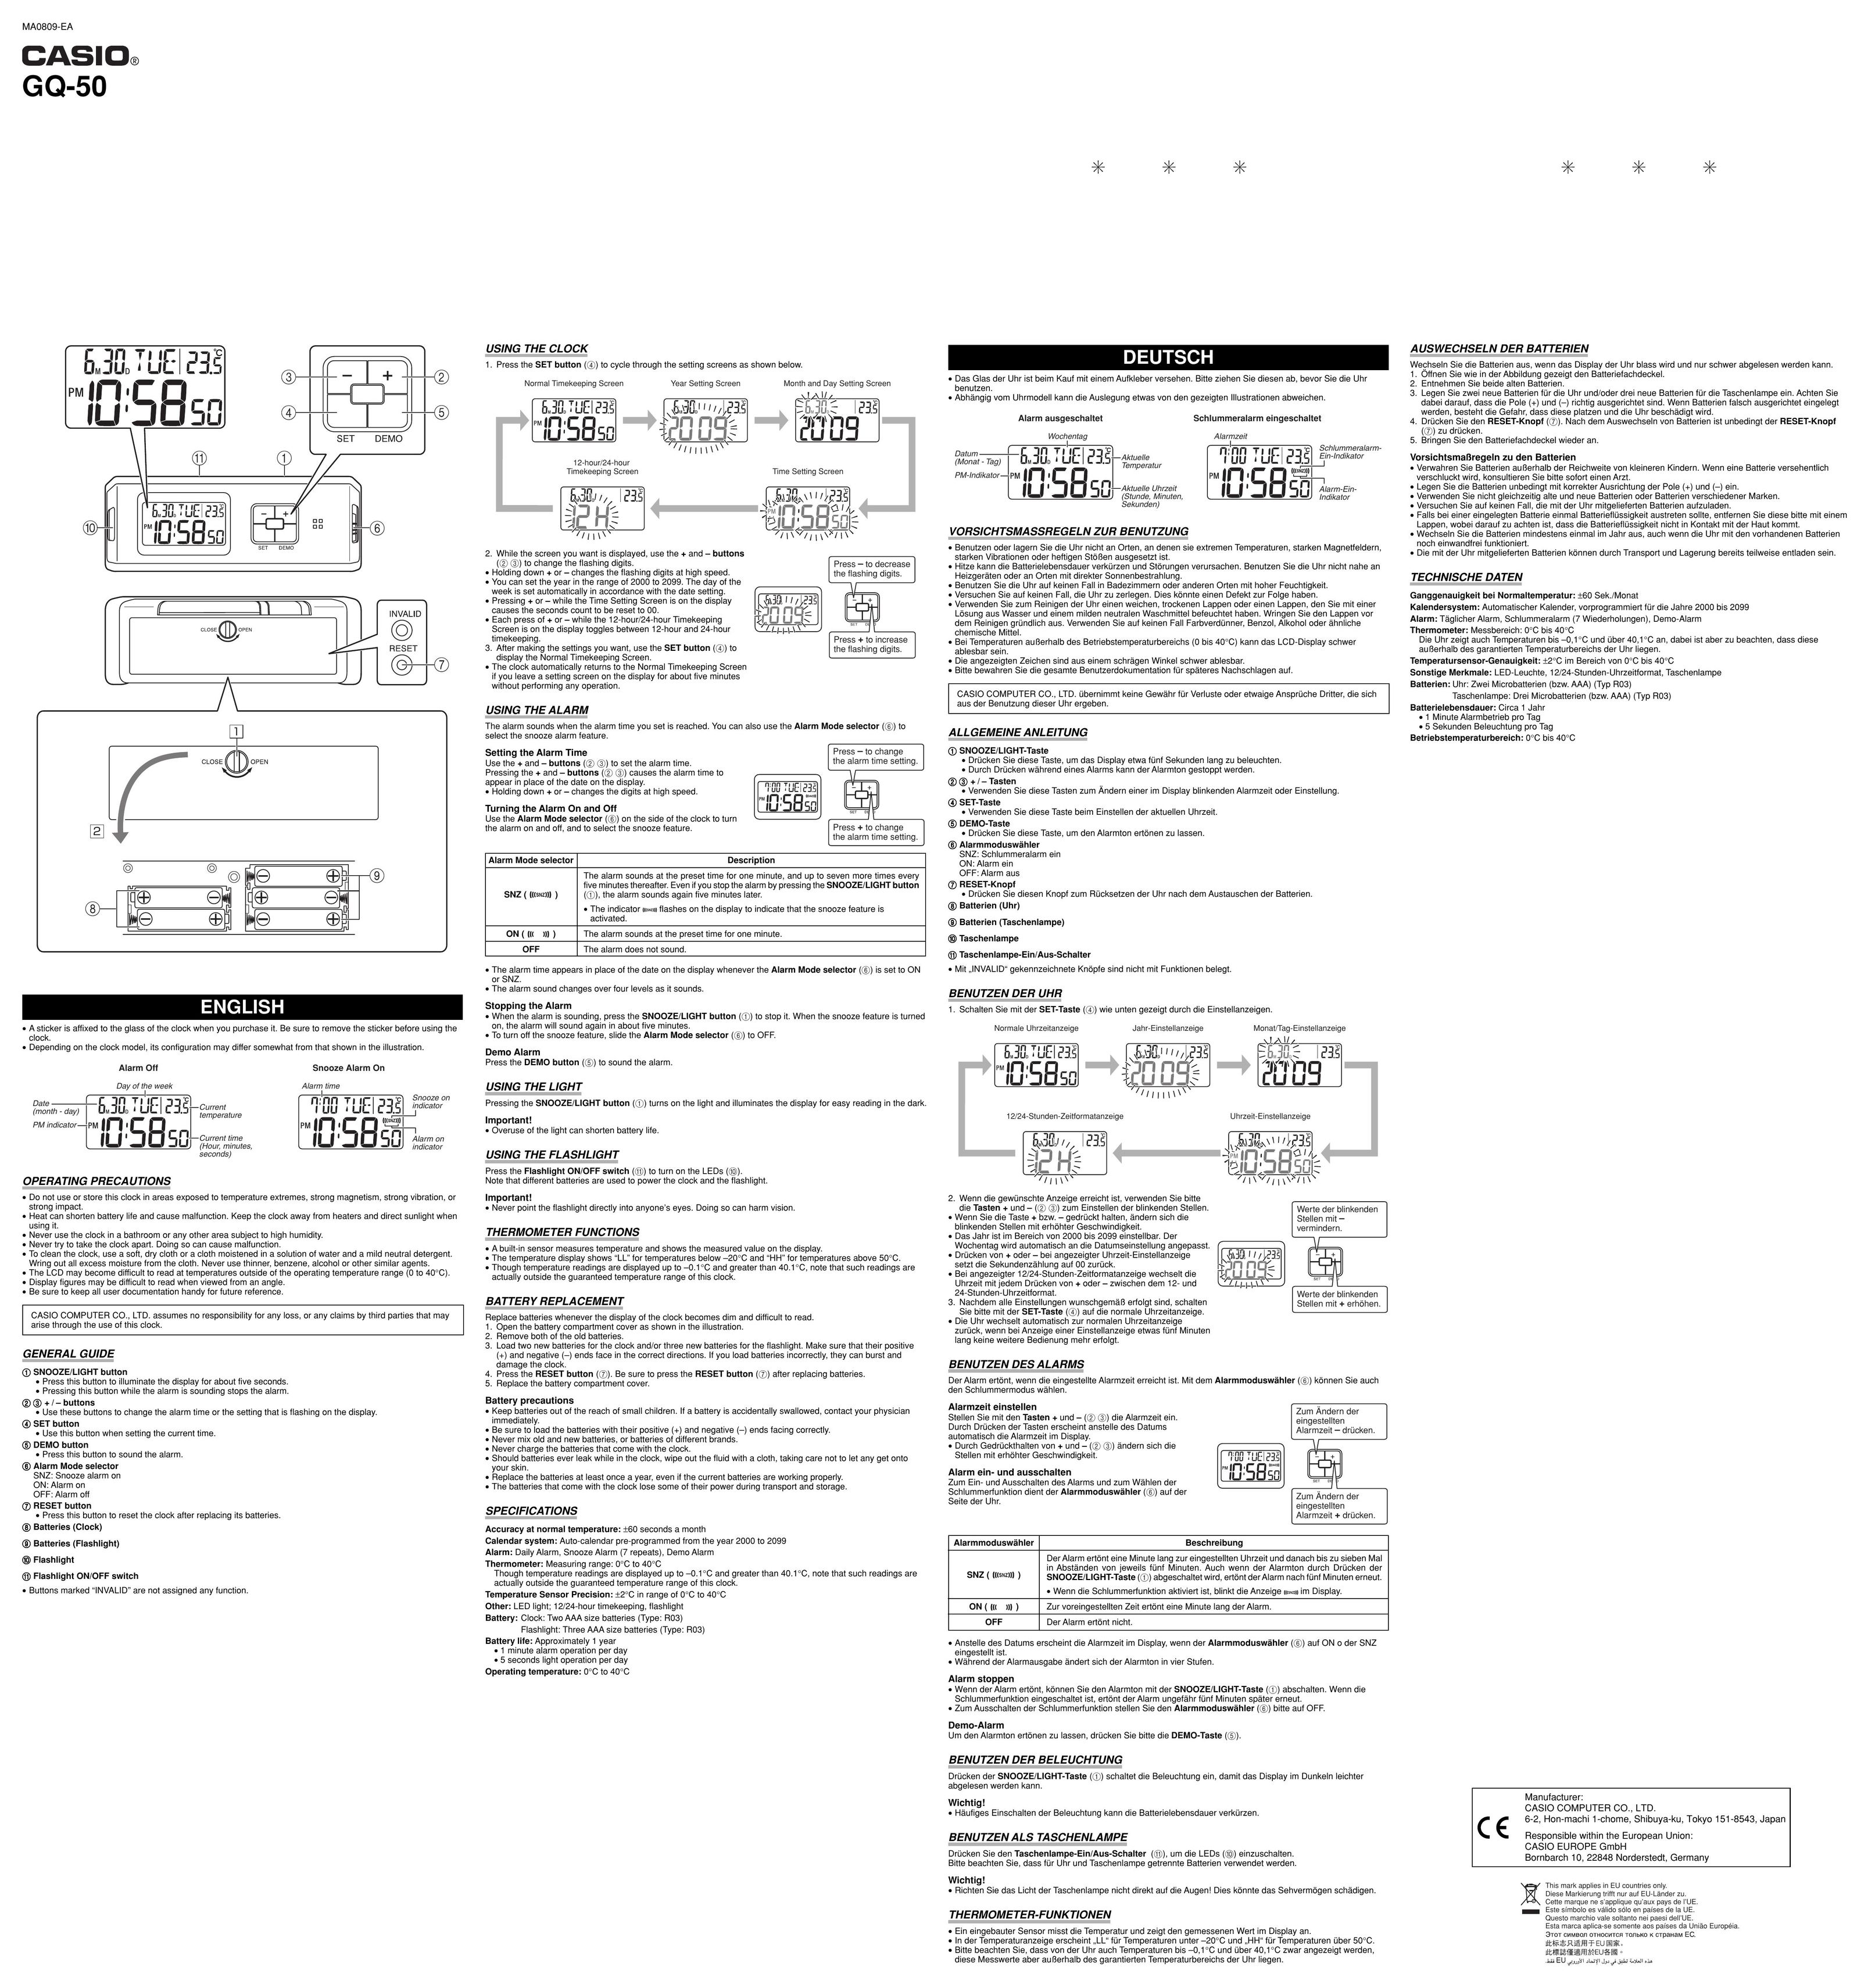 Casio GQ-50 Clock User Manual (Page 1)